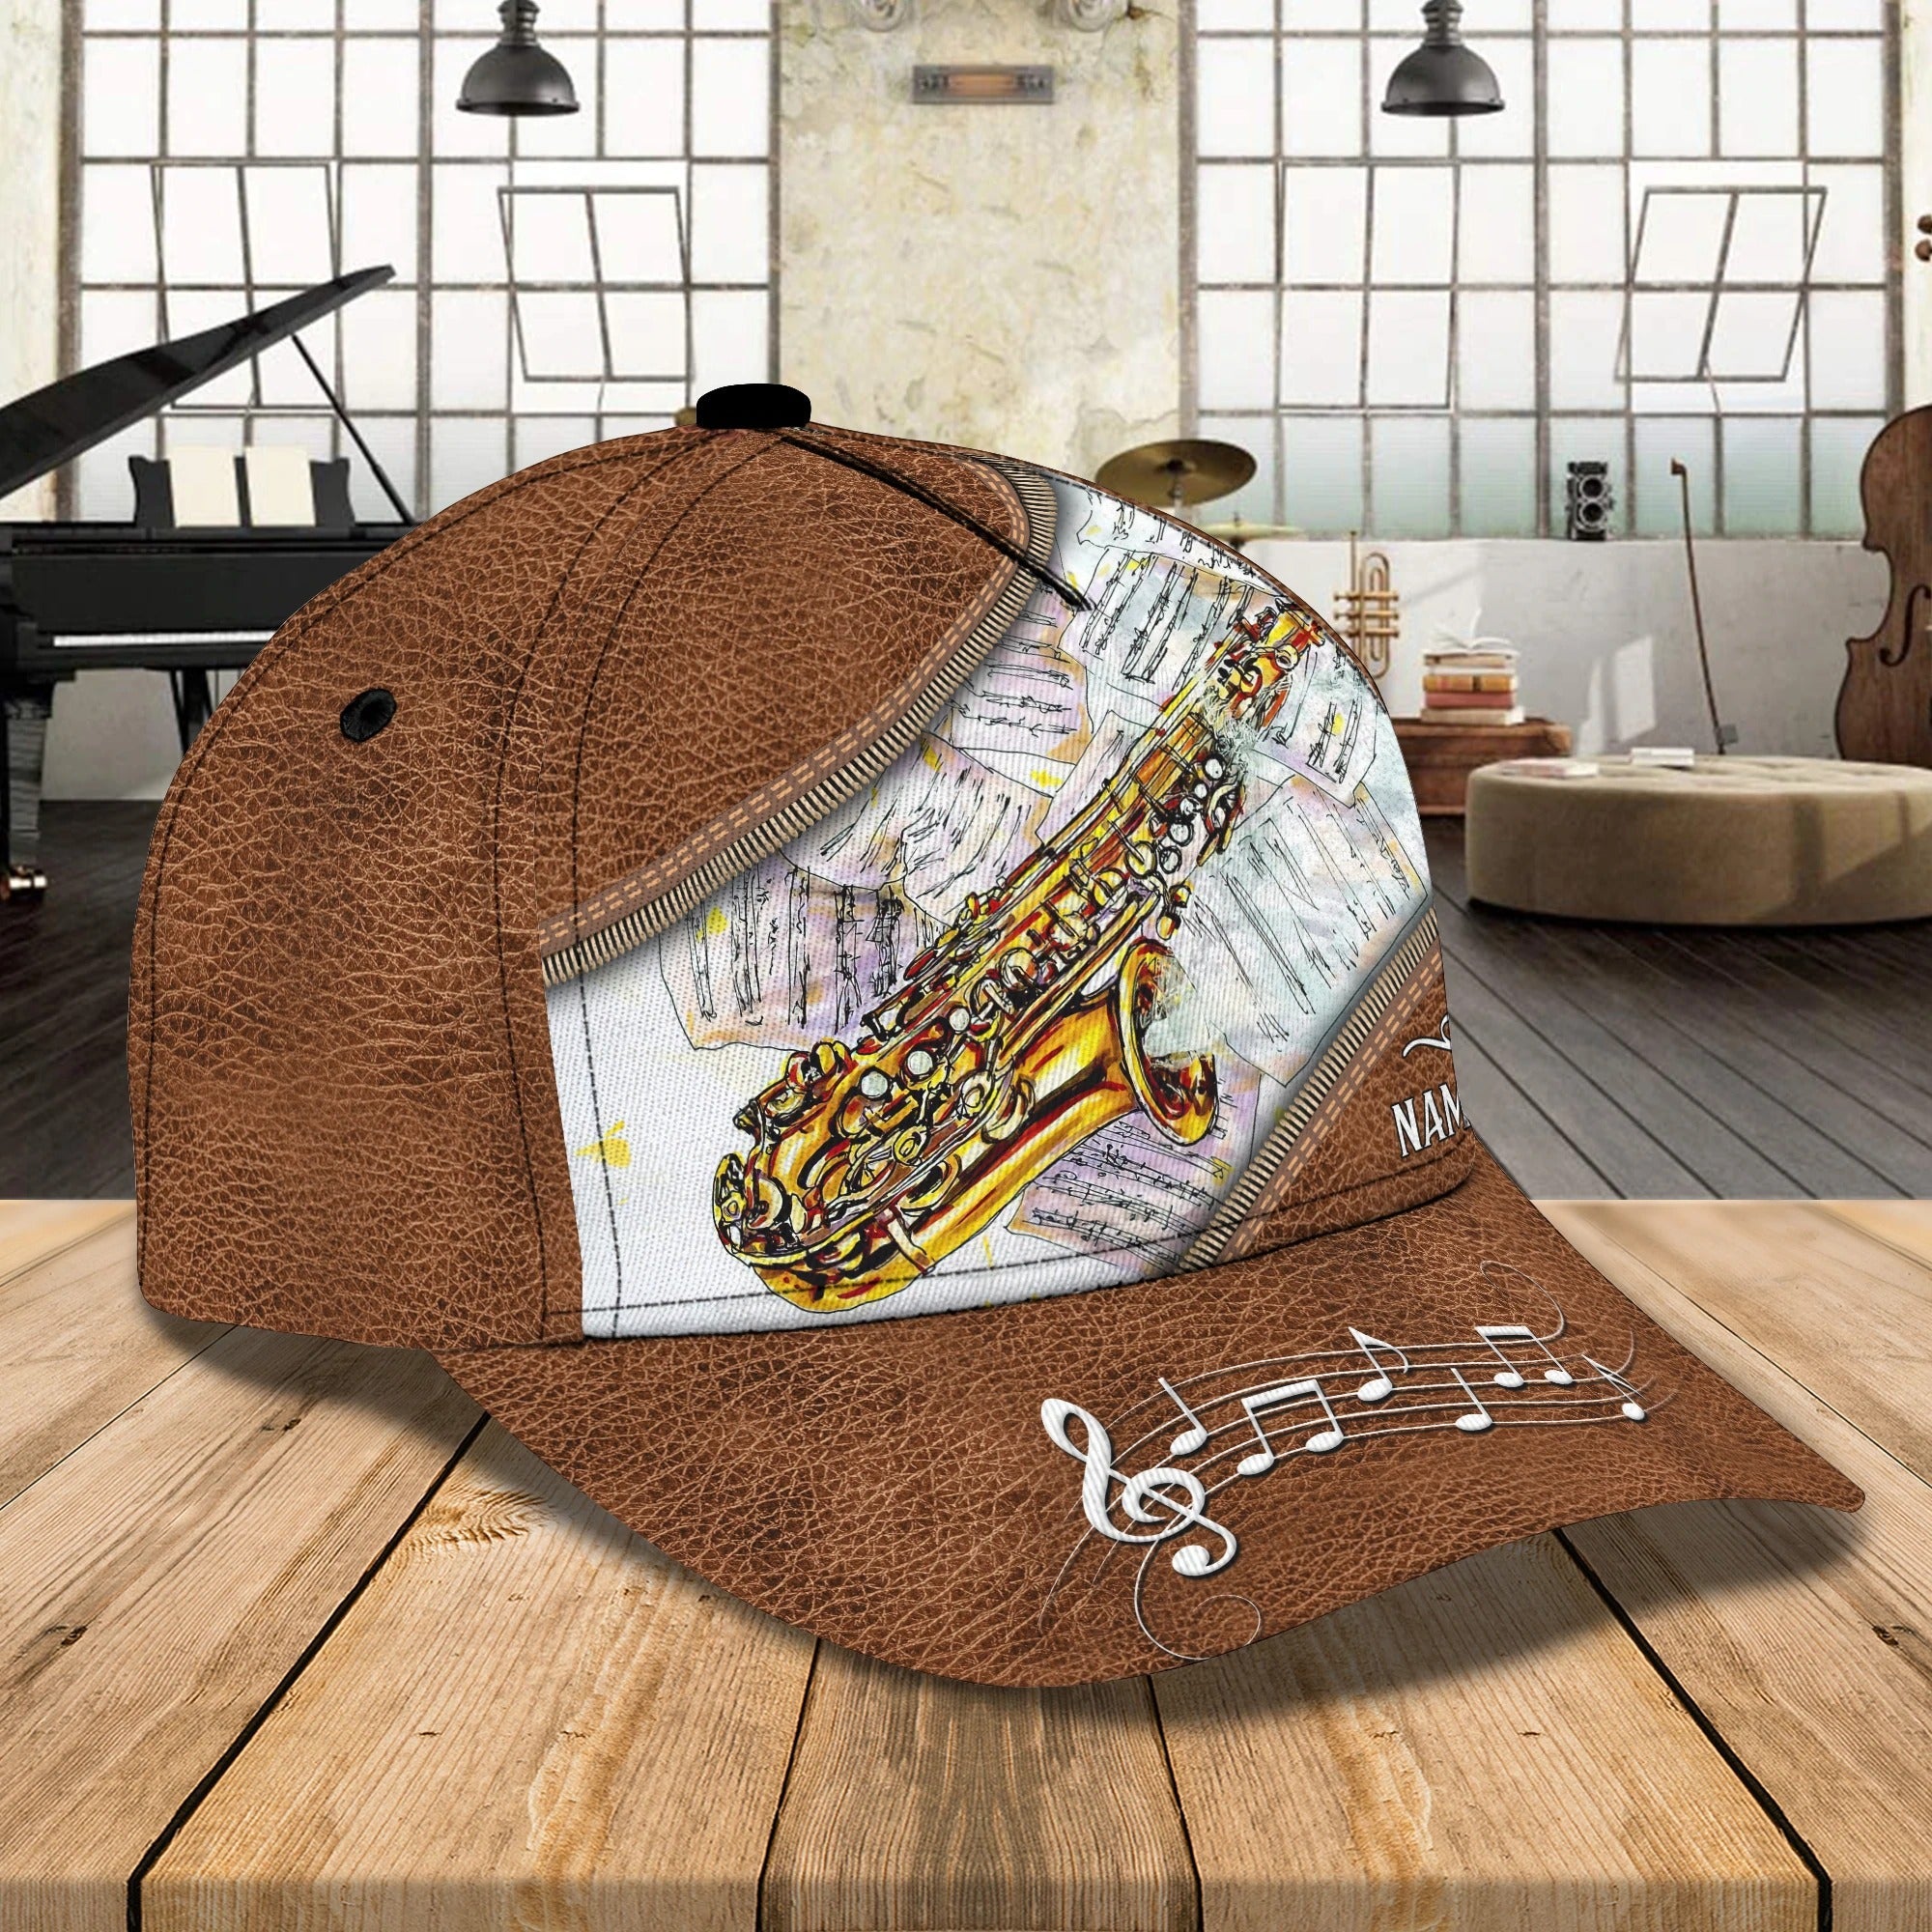 Customized 3D Baseball Saxophone Cap For Musican/ To My Boyfriend Friend Playing Saxophone/ Saxophone Cap